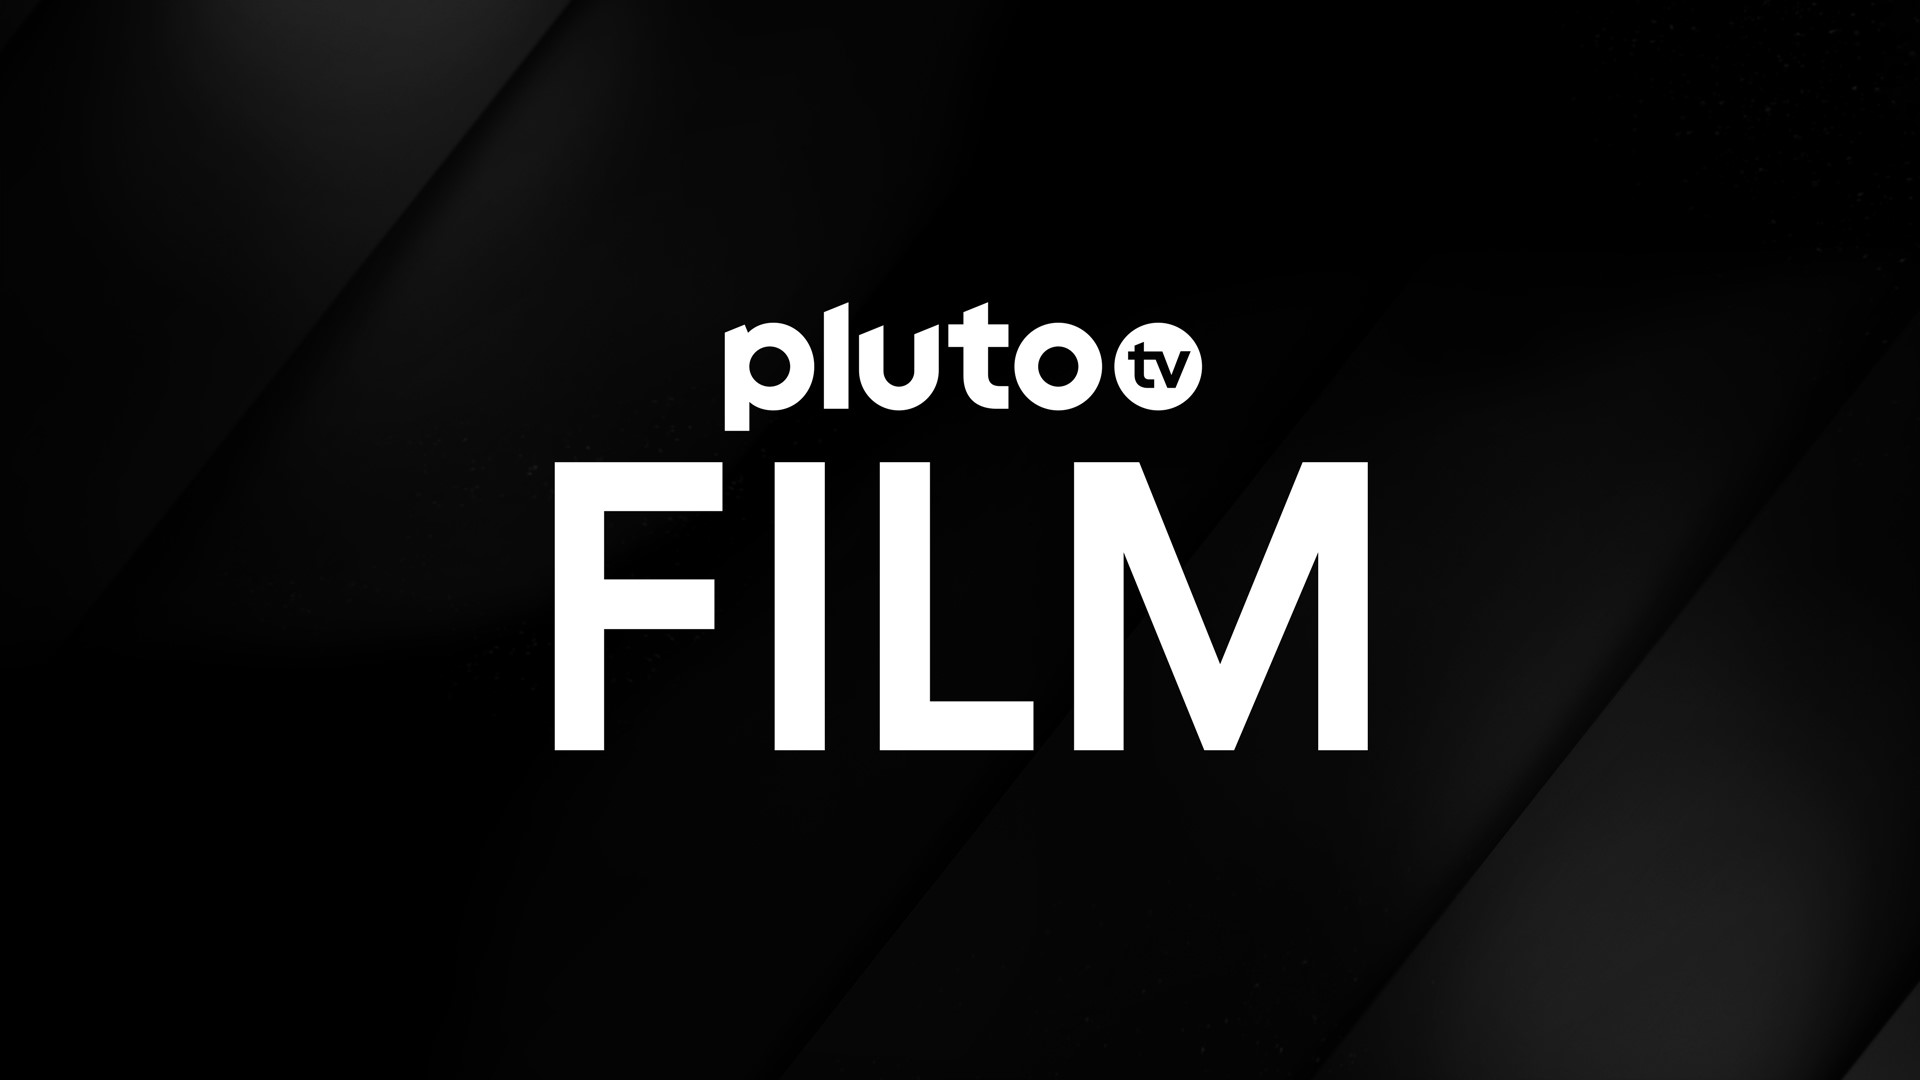 Pluto TV Film - logo tv